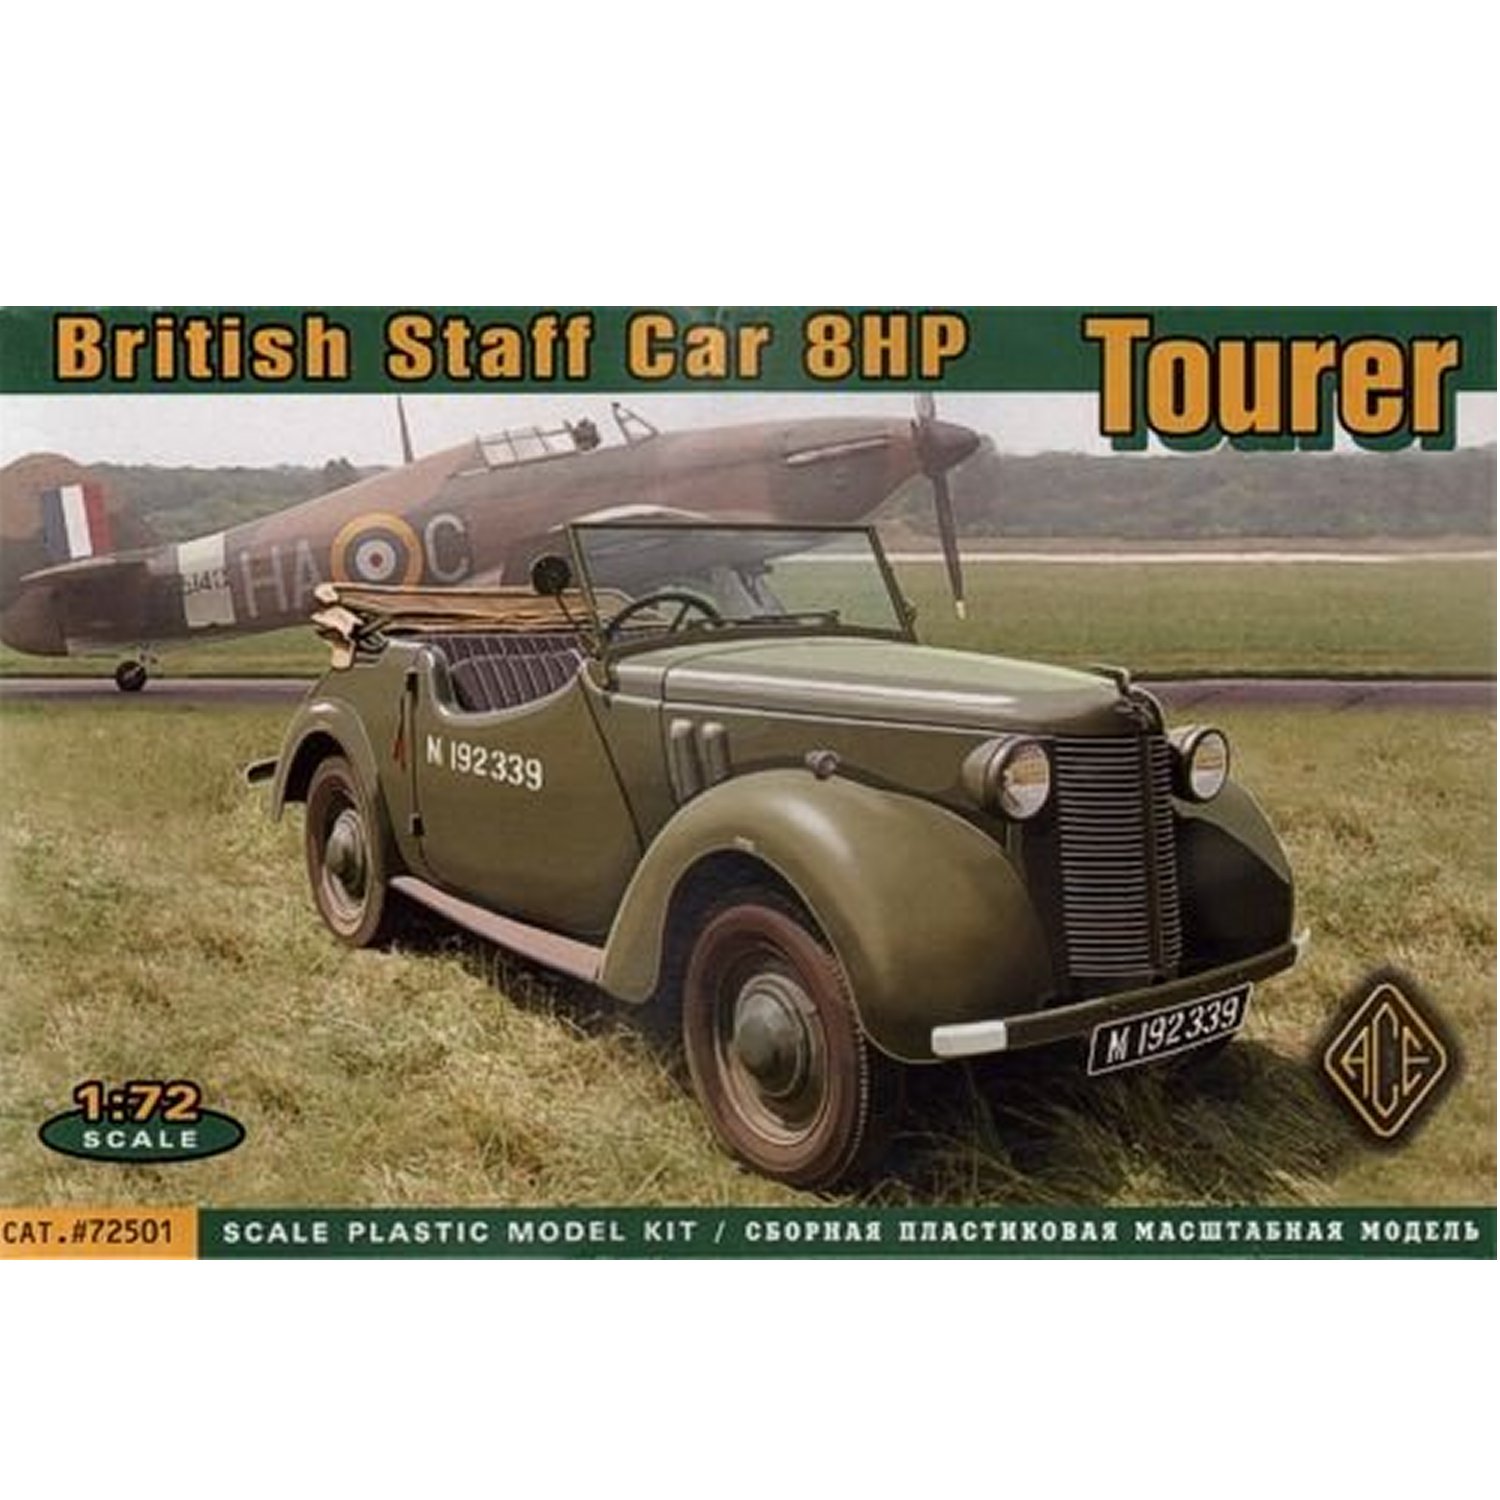 maquette vã©hicule militaire : british staff car 8 hp